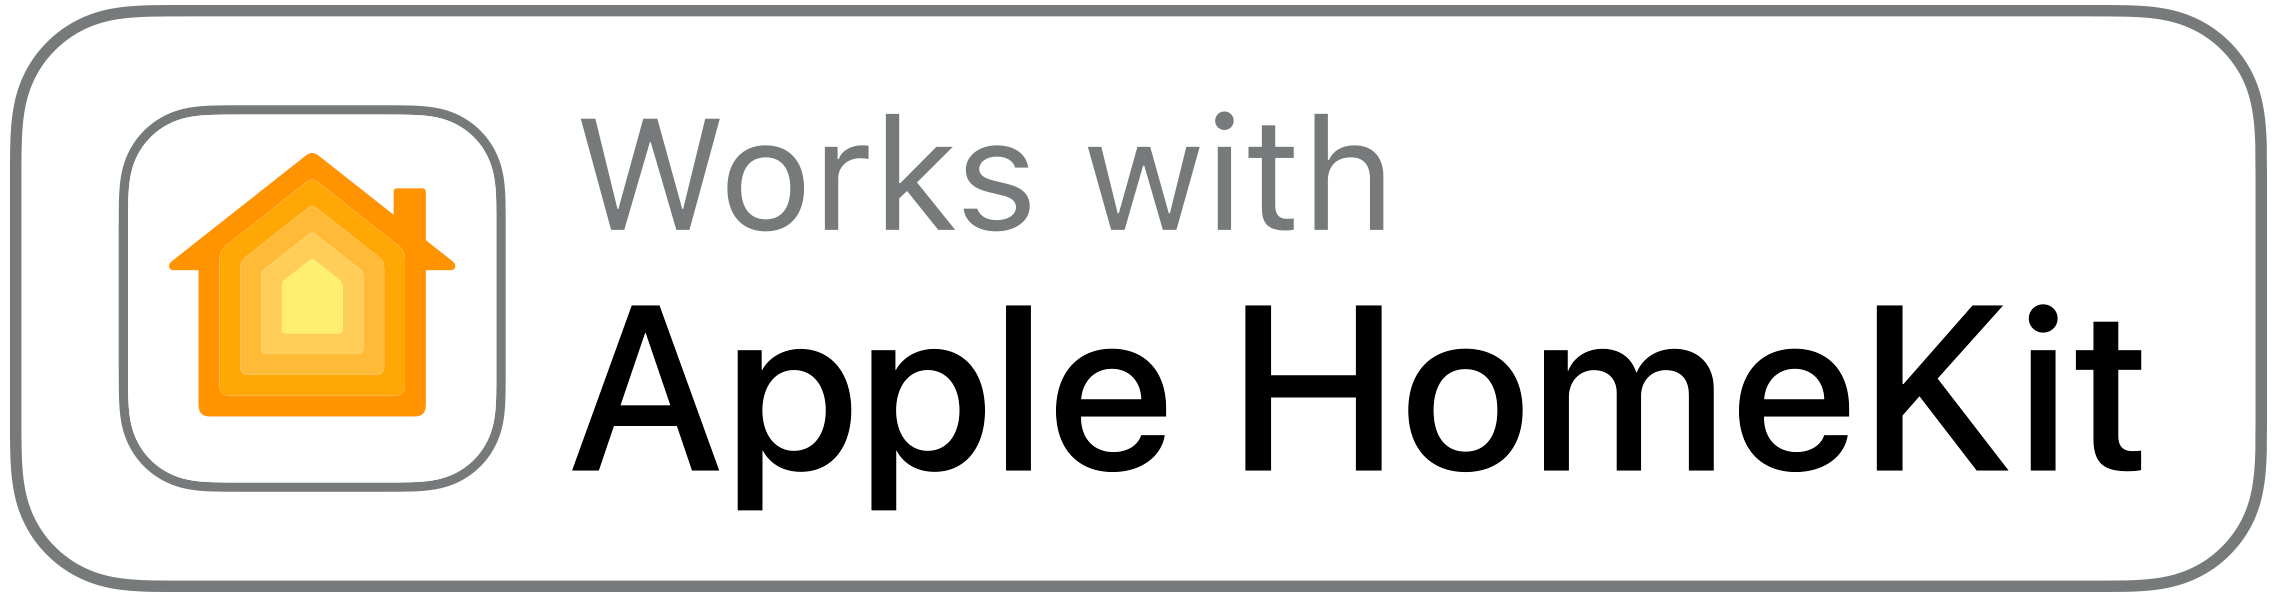 RainMachine Touch HD-12/16 works with Apple HomeKit